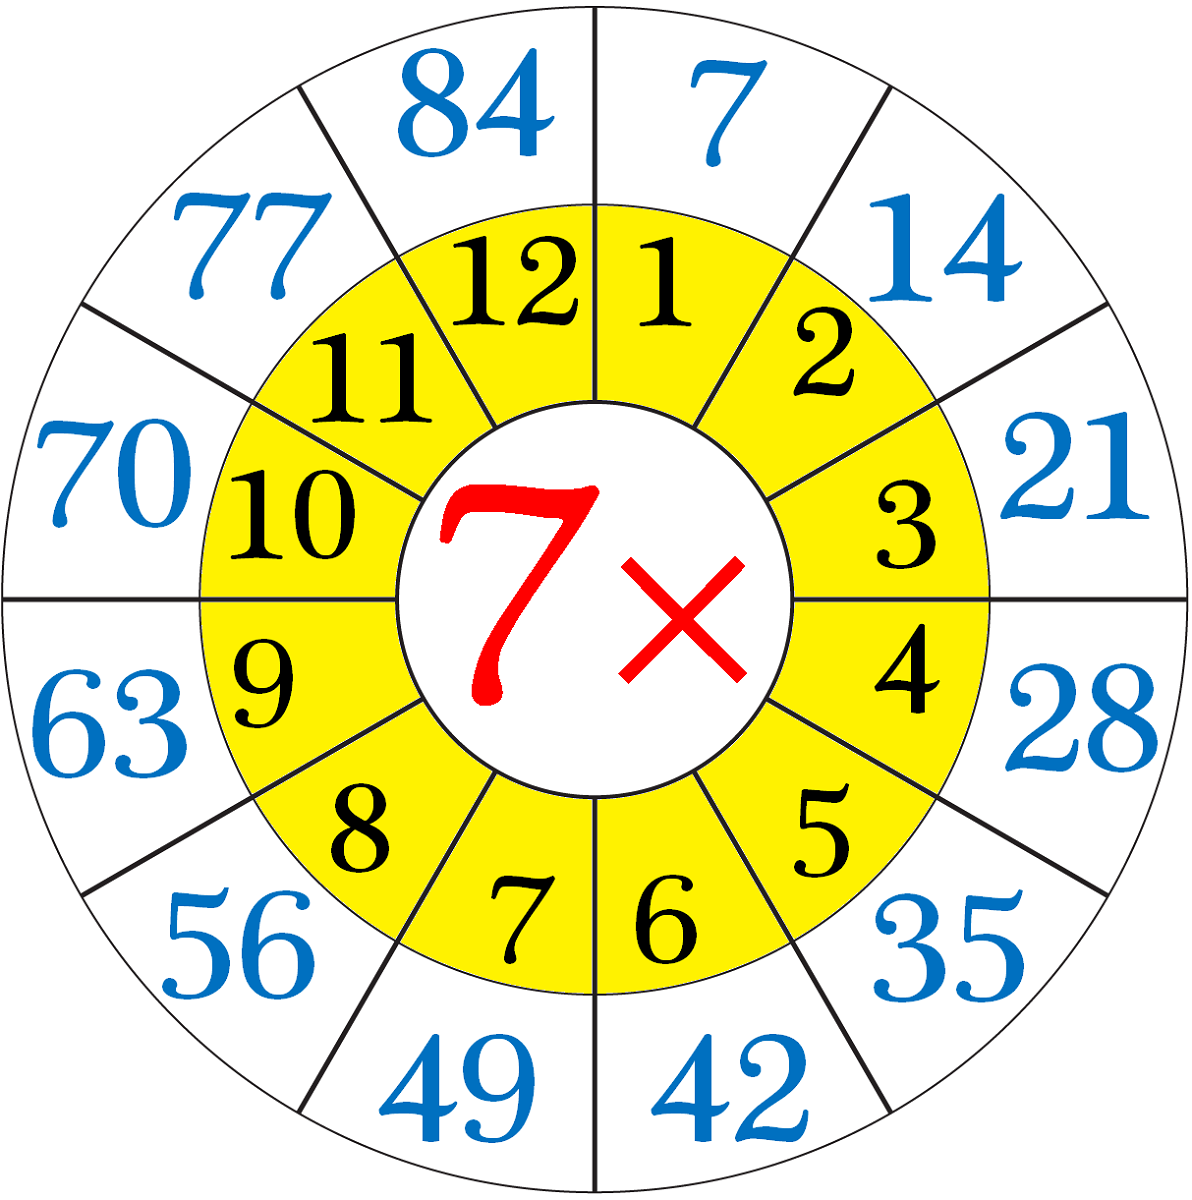 7 times table chart circle